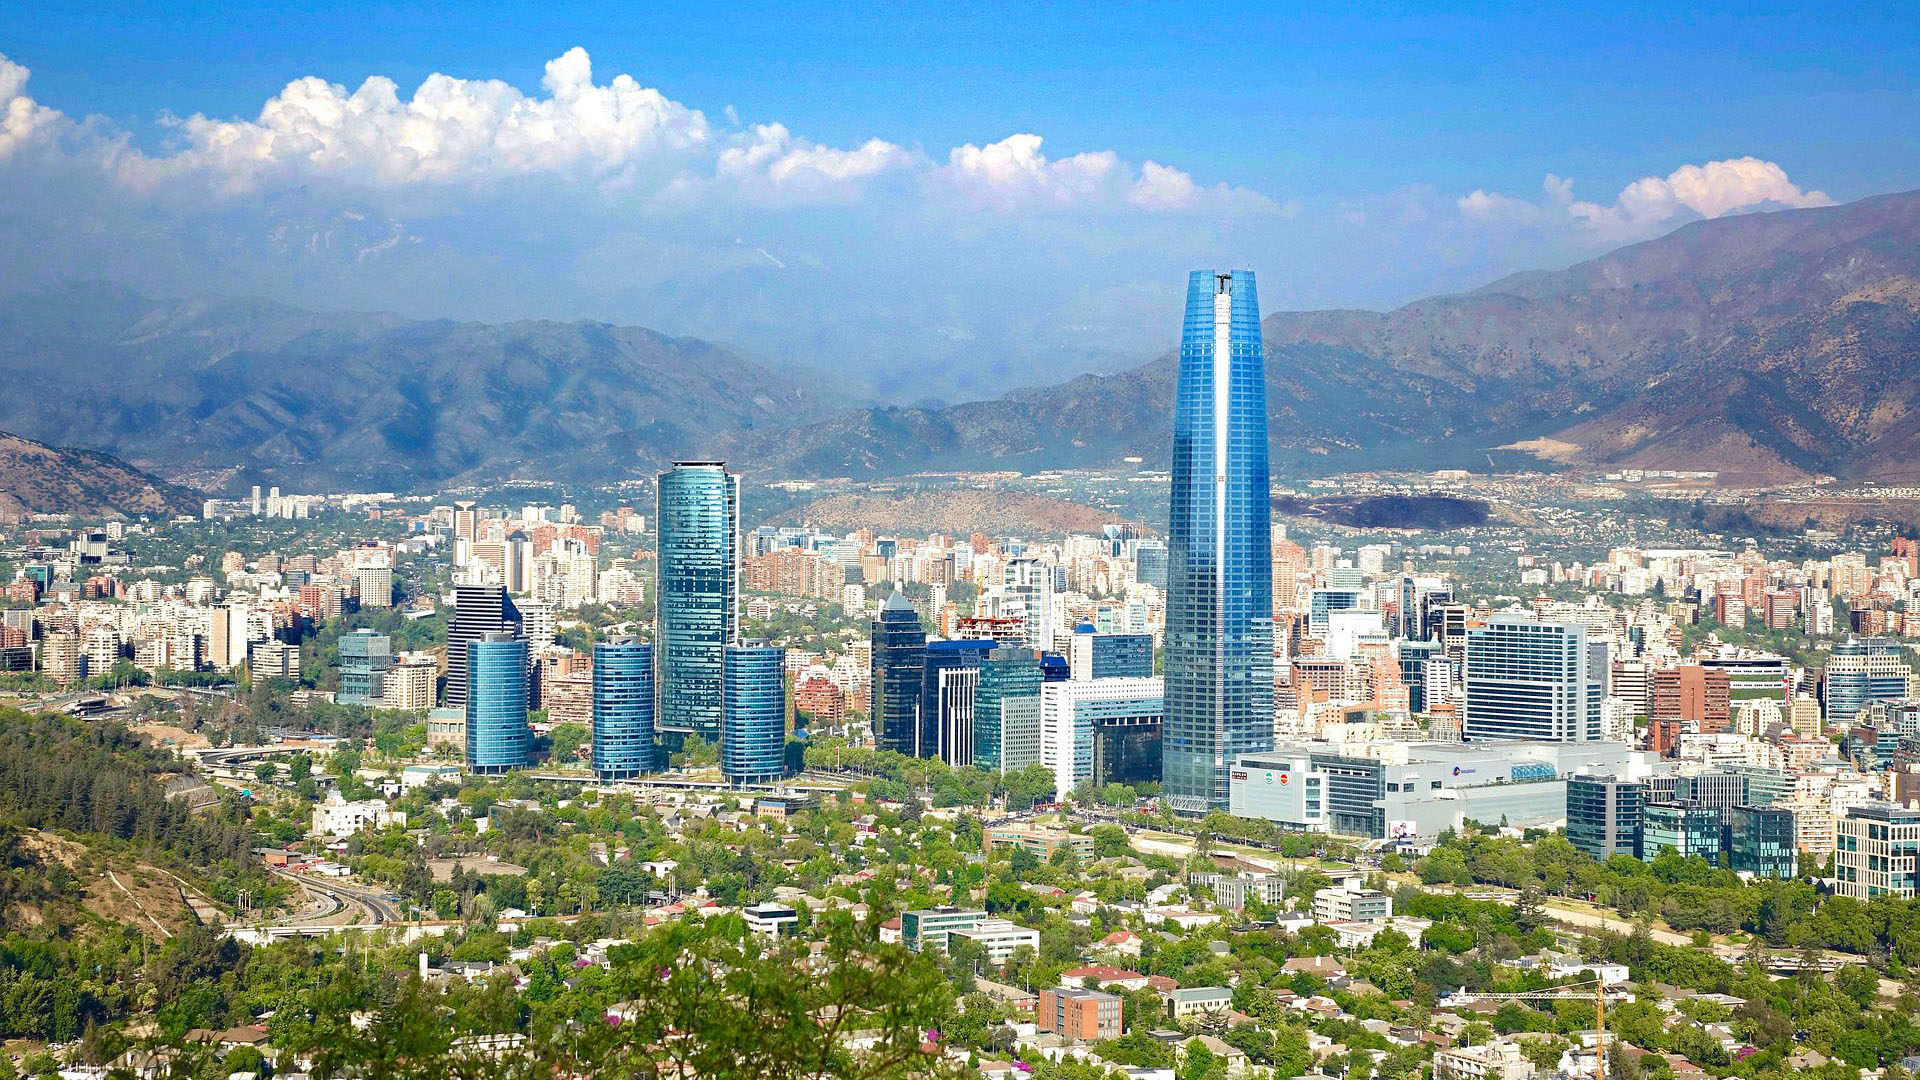 The skyline of Santiago de Chile